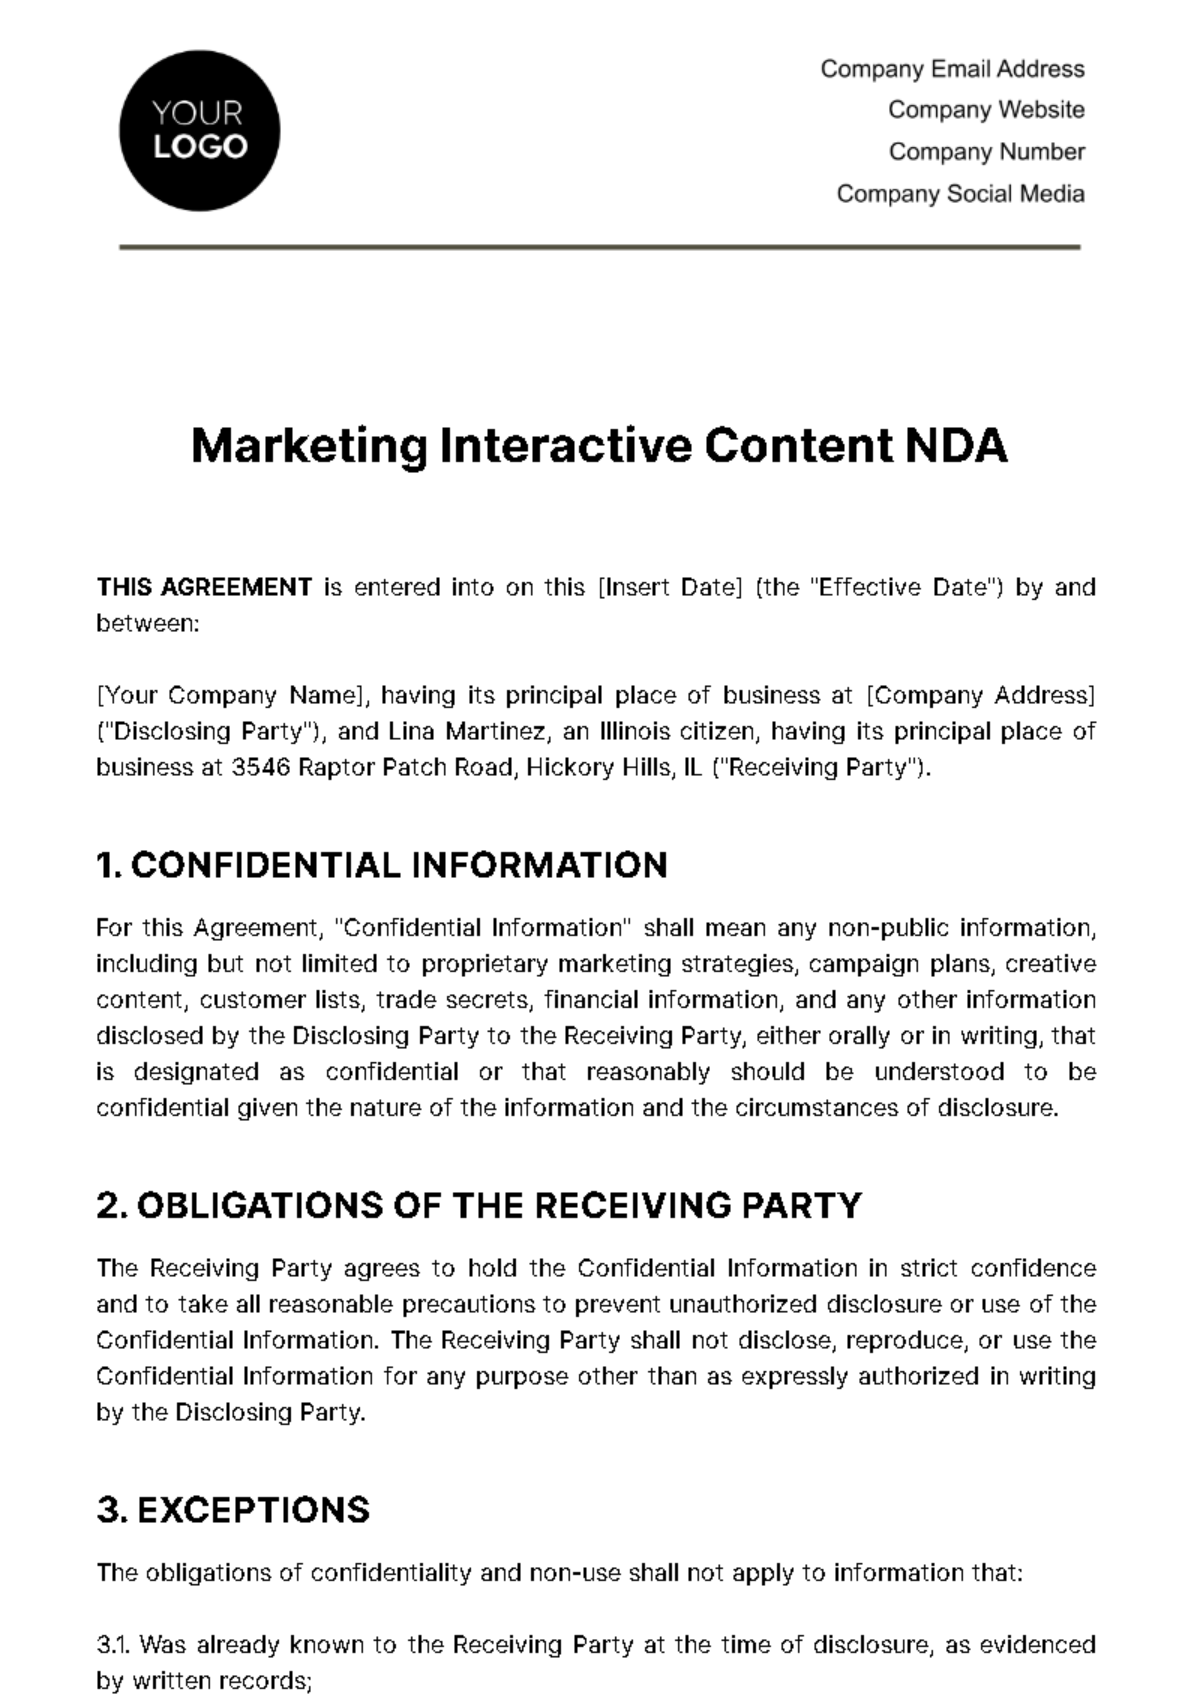 Marketing Interactive Content NDA Template